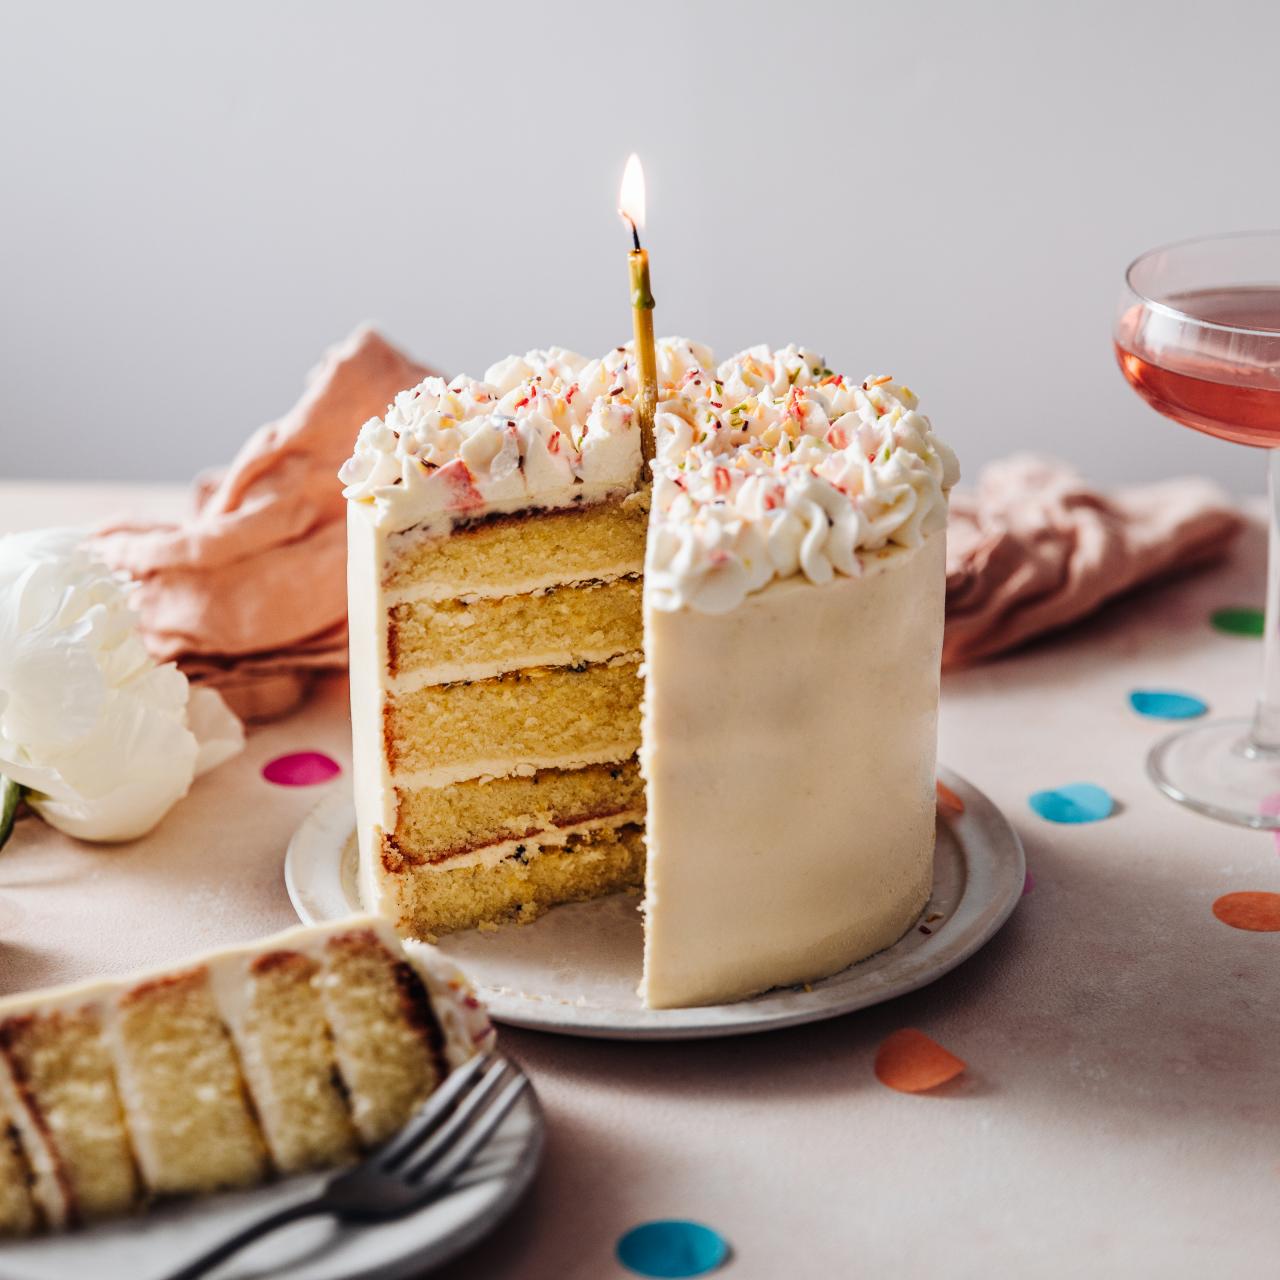 Preppy Picnic Wedding Photo Shoot from Meg Perotti + Allure Consulting |  Wedding cakes, Wedding cake inspiration, Eat cake